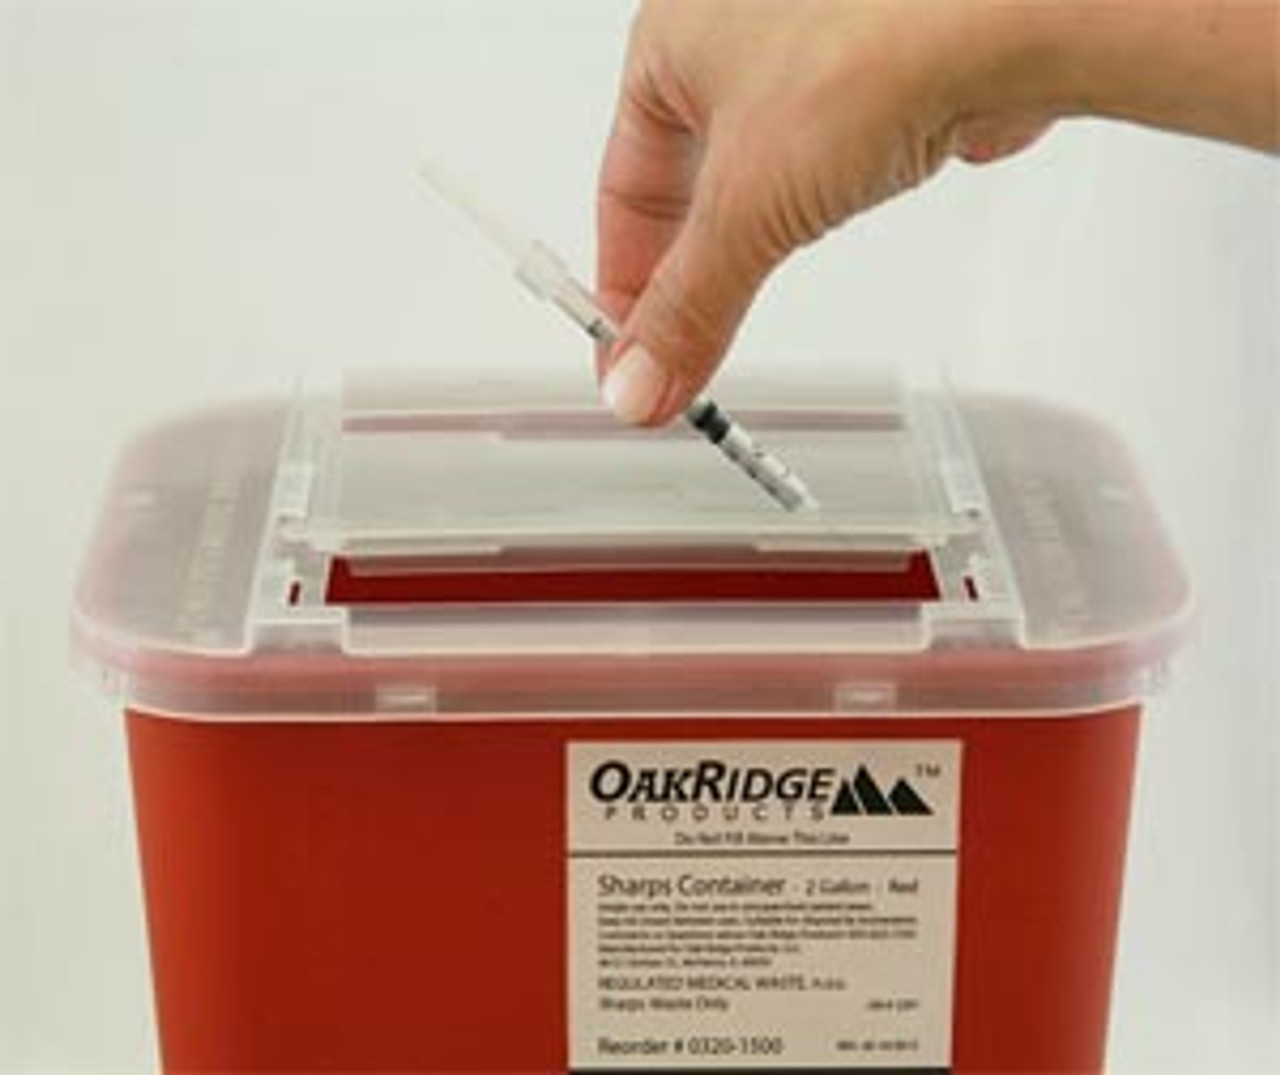 OakRidge Plebotomy Sharps Container, 2 Gallon, Slide Lid, 20/cs